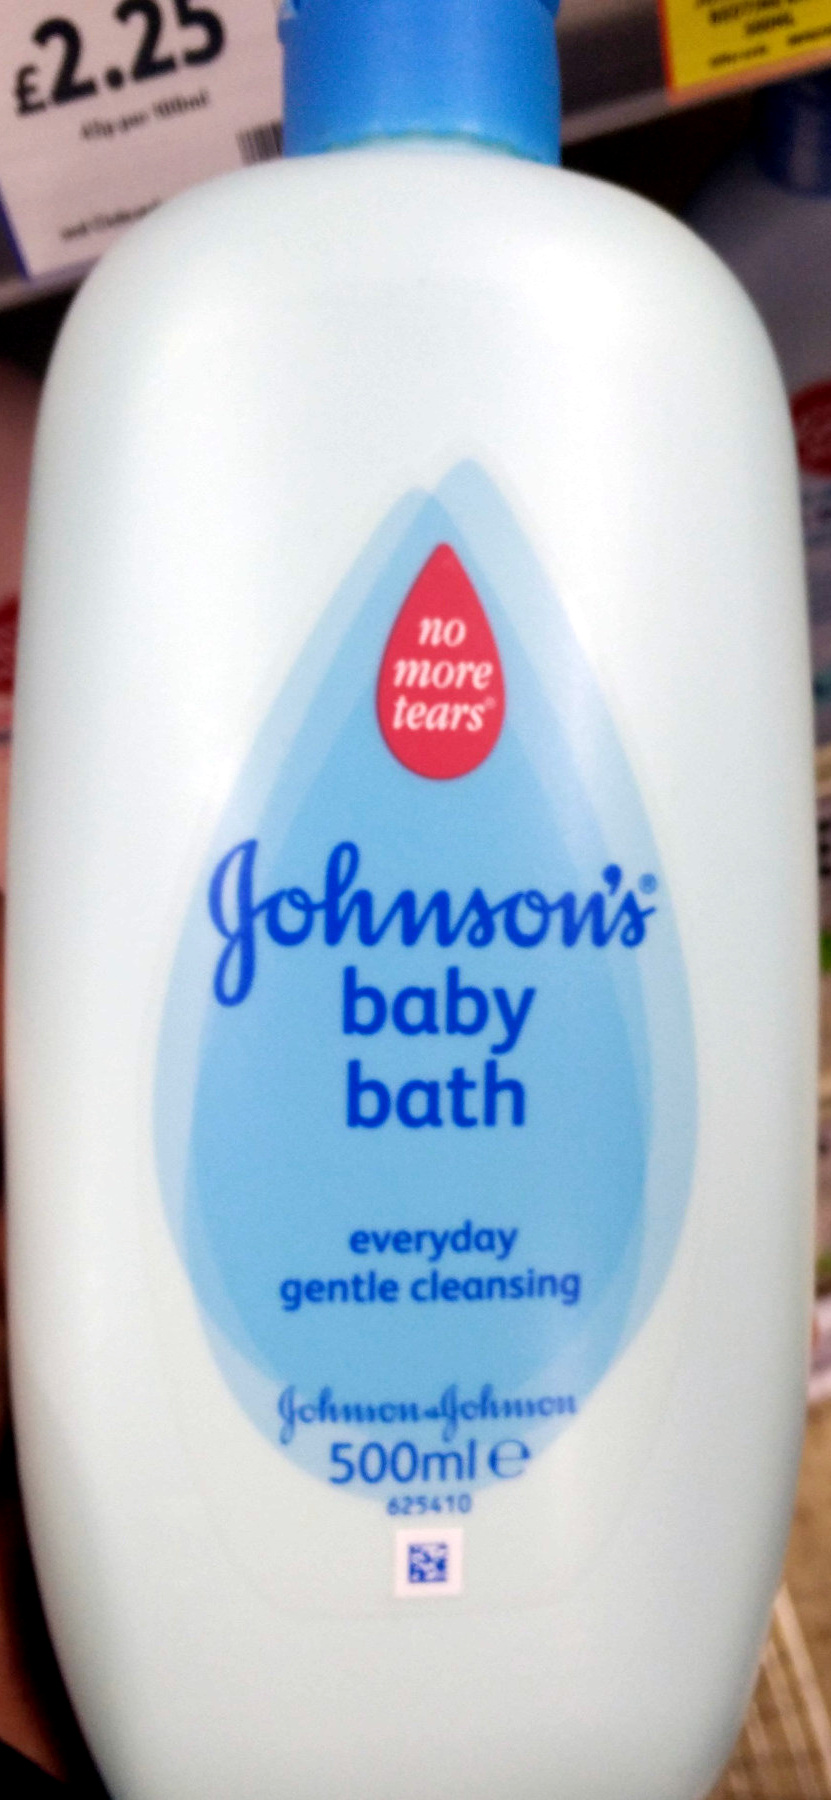 Baby Bath - Produkt - en